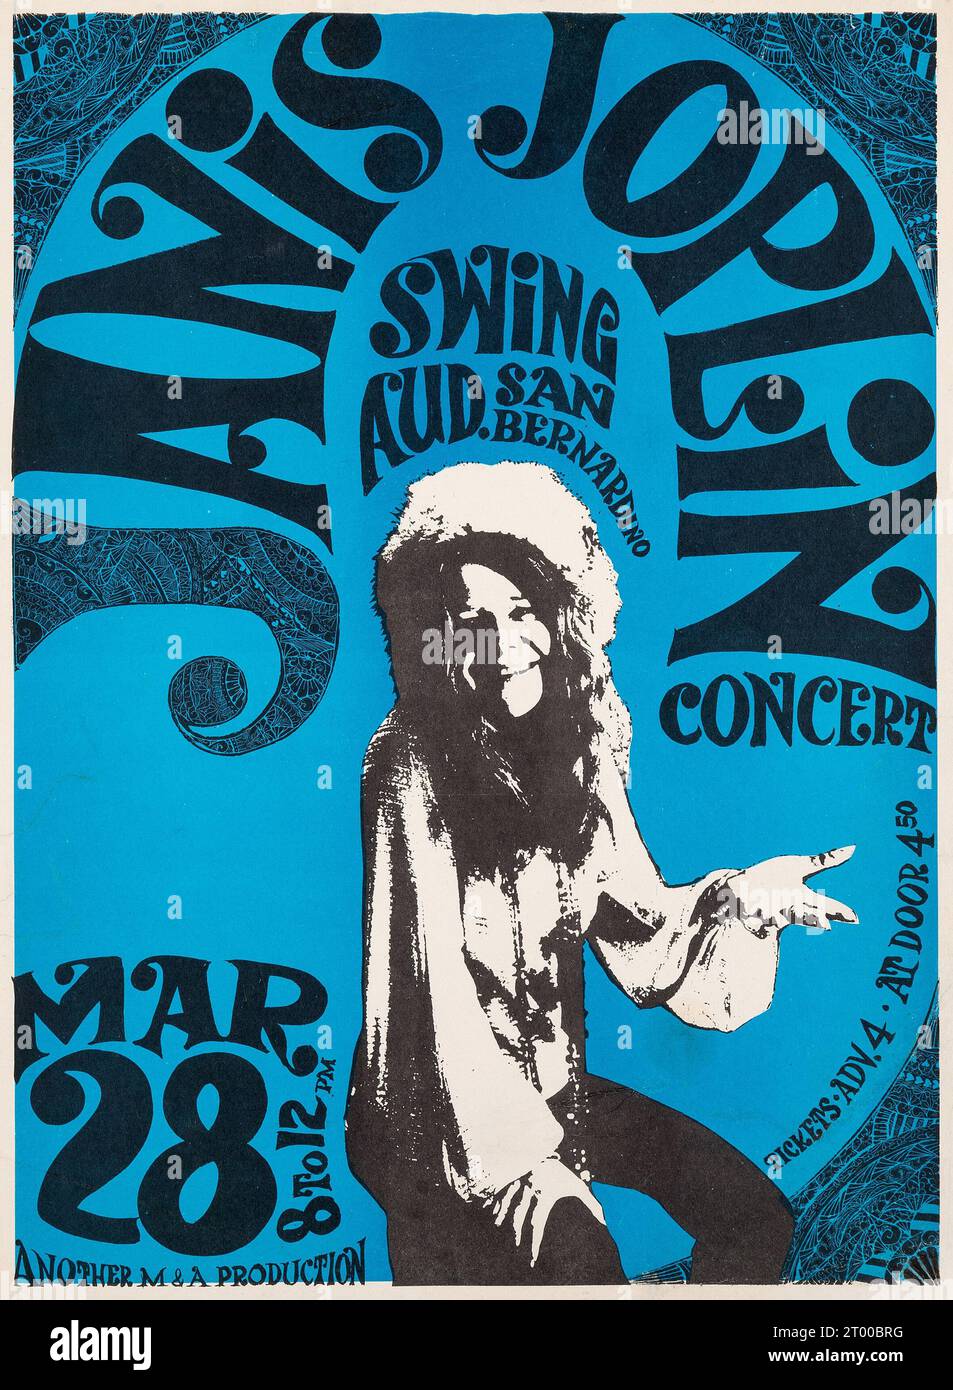 Janis Joplin March 28, 1969 San Bernardino, California, Concert Poster Stock Photo